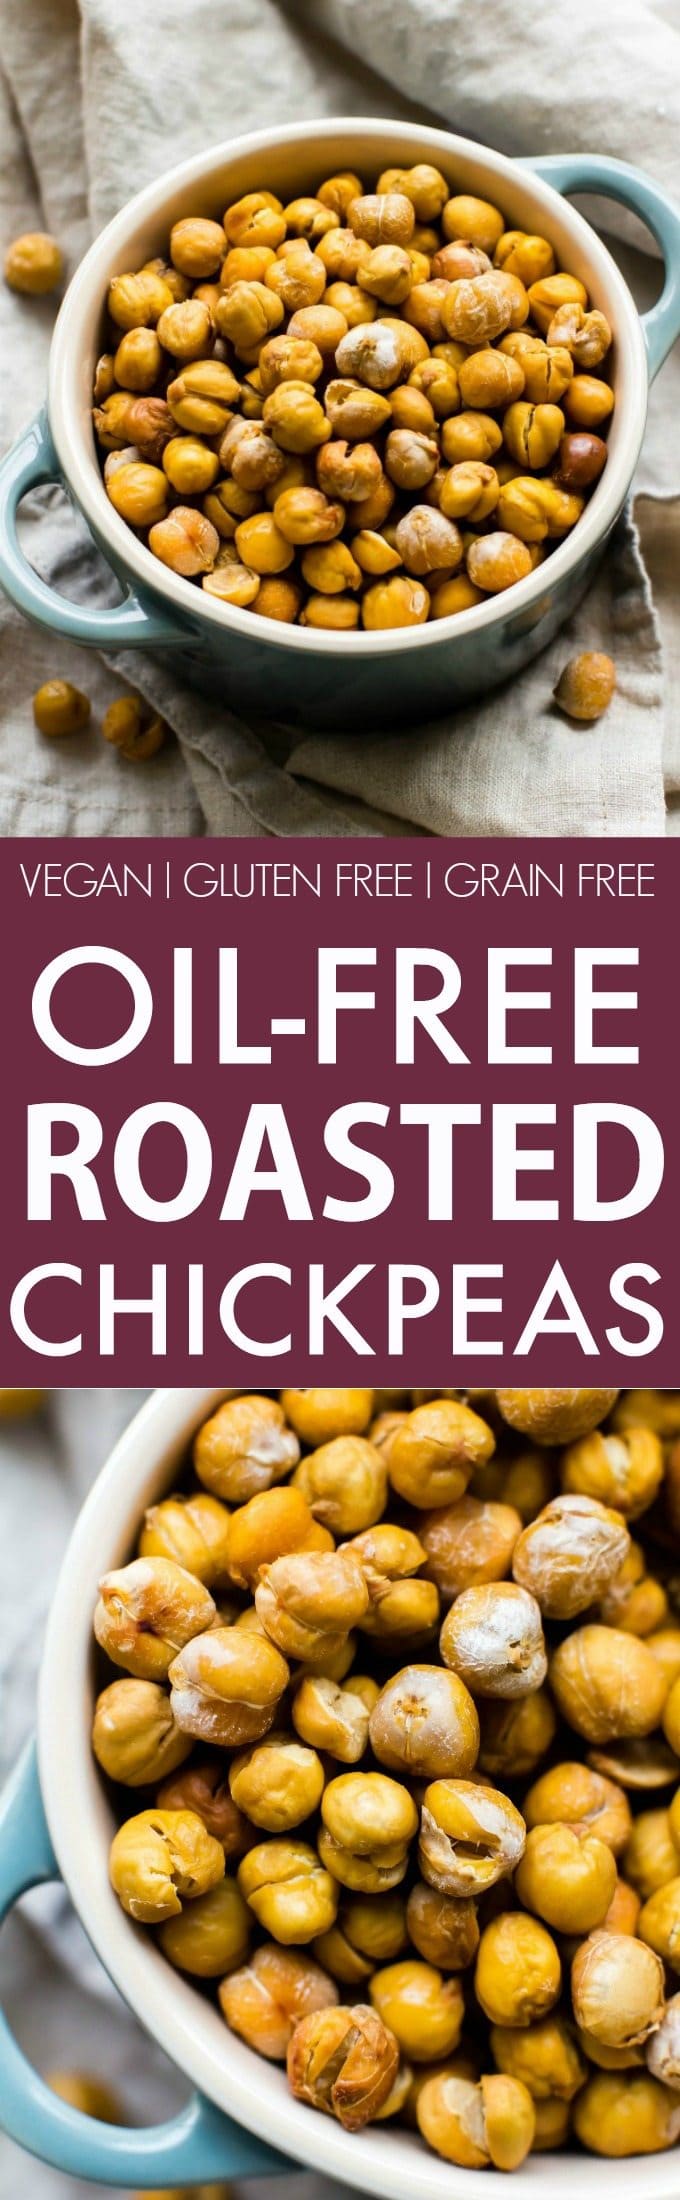 healthy oil-free roasted chickpeas (vegan, gluten free, grain free)